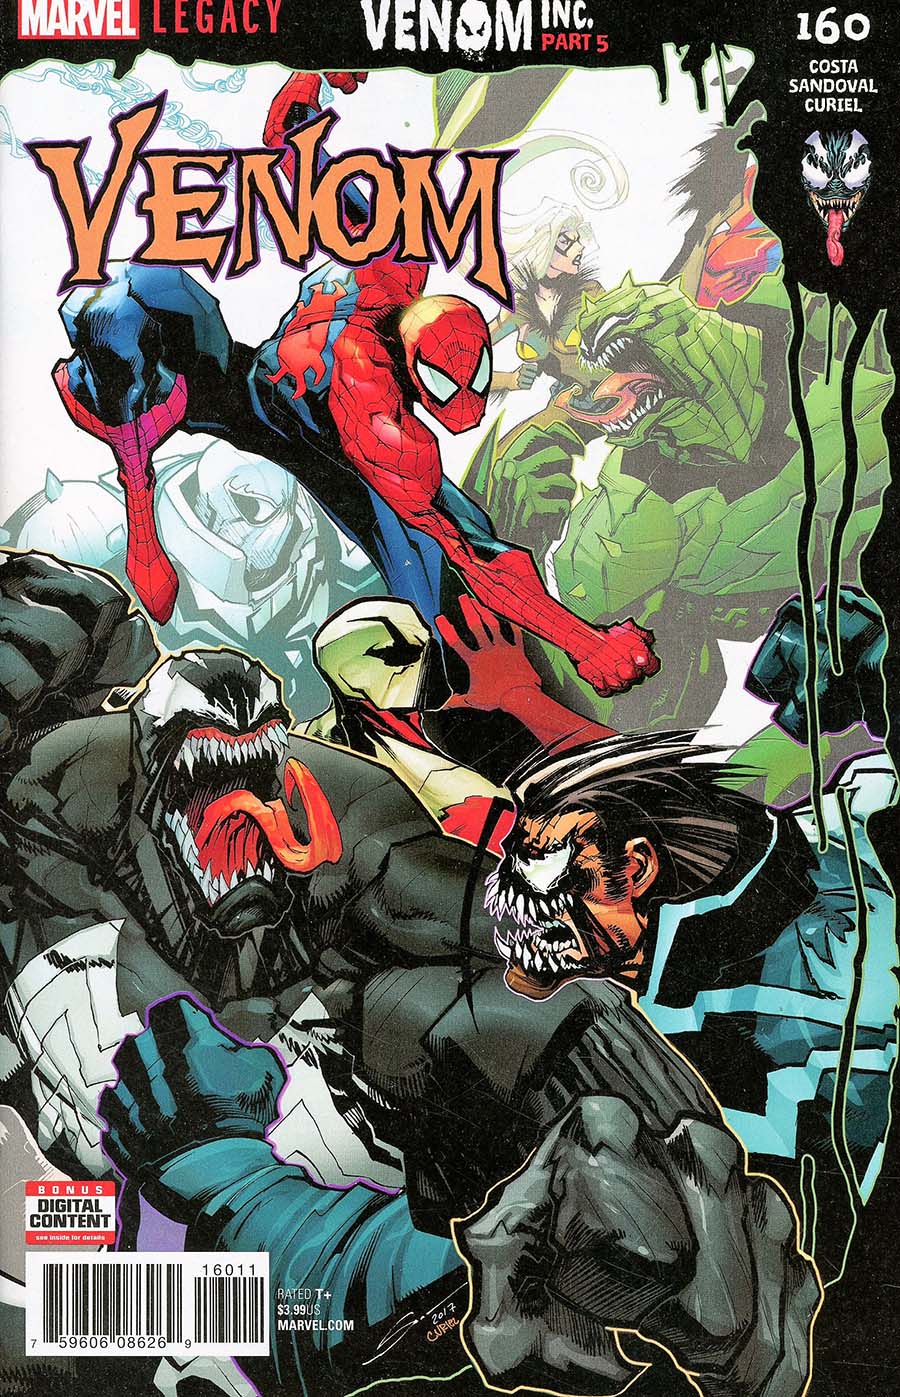 Venom Vol 3 #160 Cover A 1st Ptg Regular Gerardo Sandoval Cover (Venom Inc Part 5)(Marvel Legacy Tie-In)